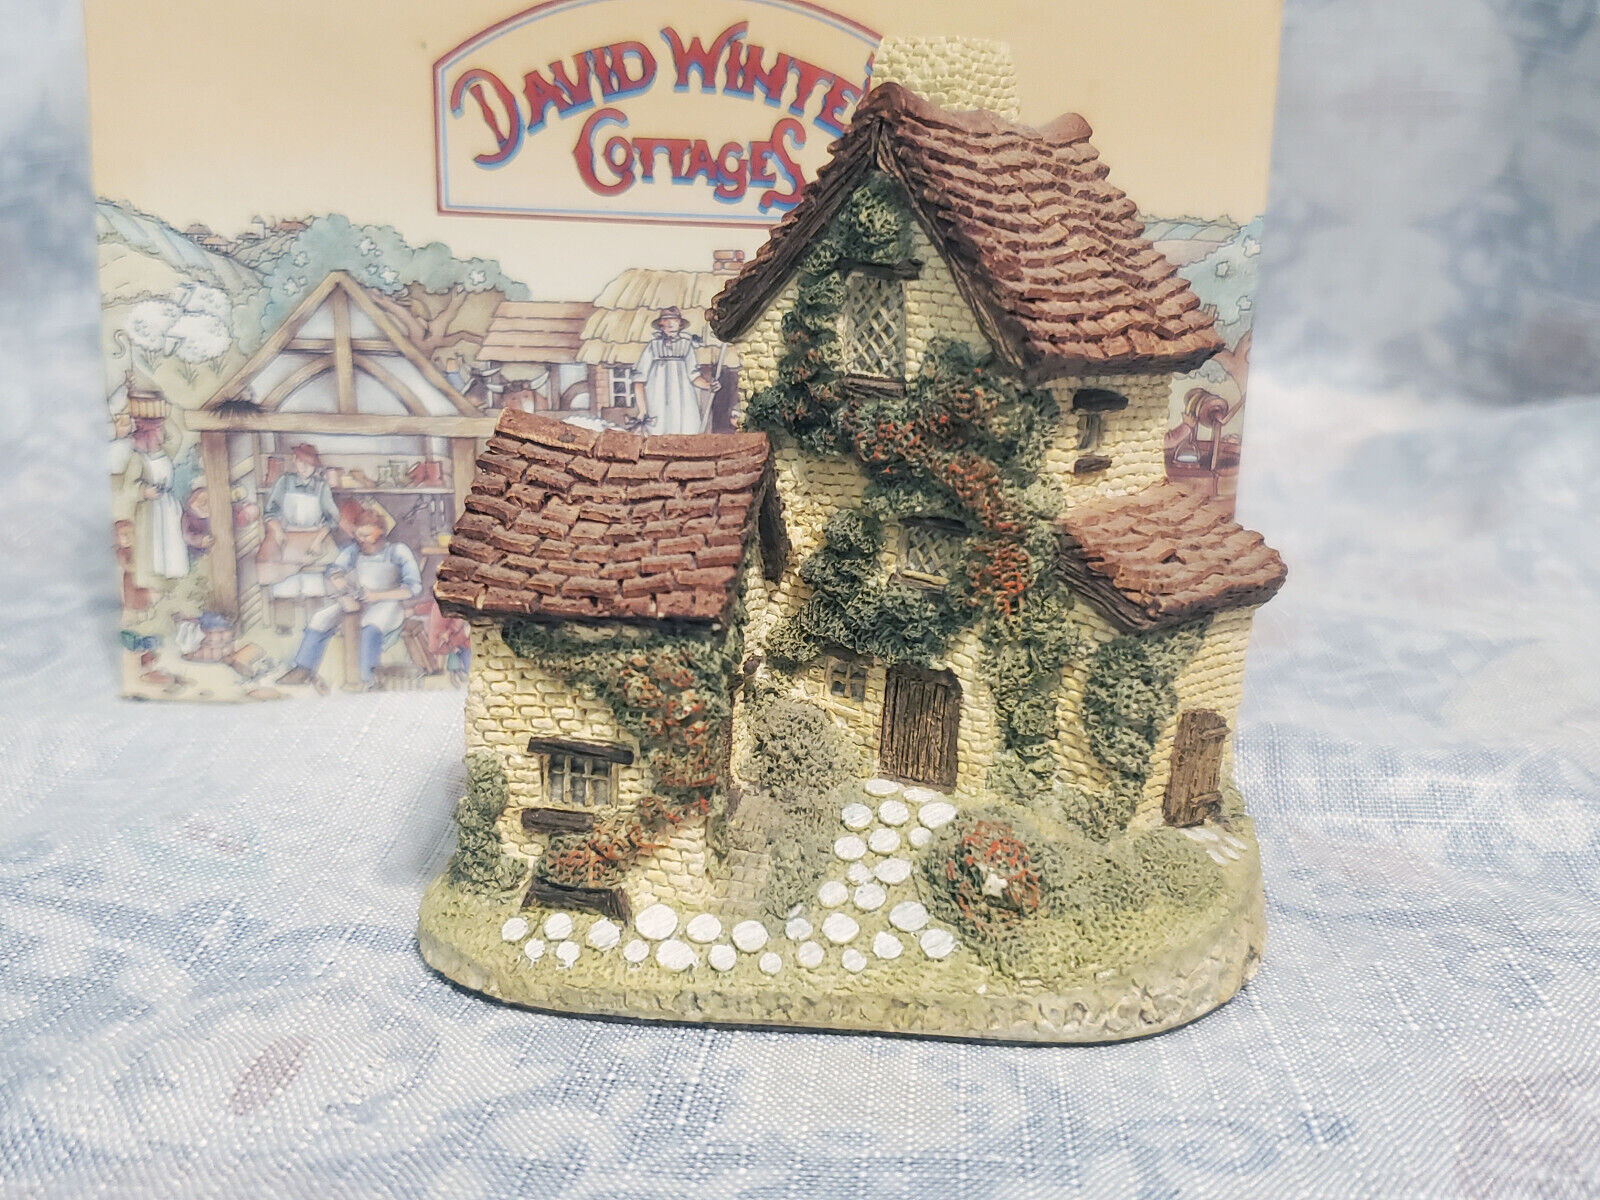 DAVID WINTER Cottages IVY COTTAGE with Original Box  1982 Vintage